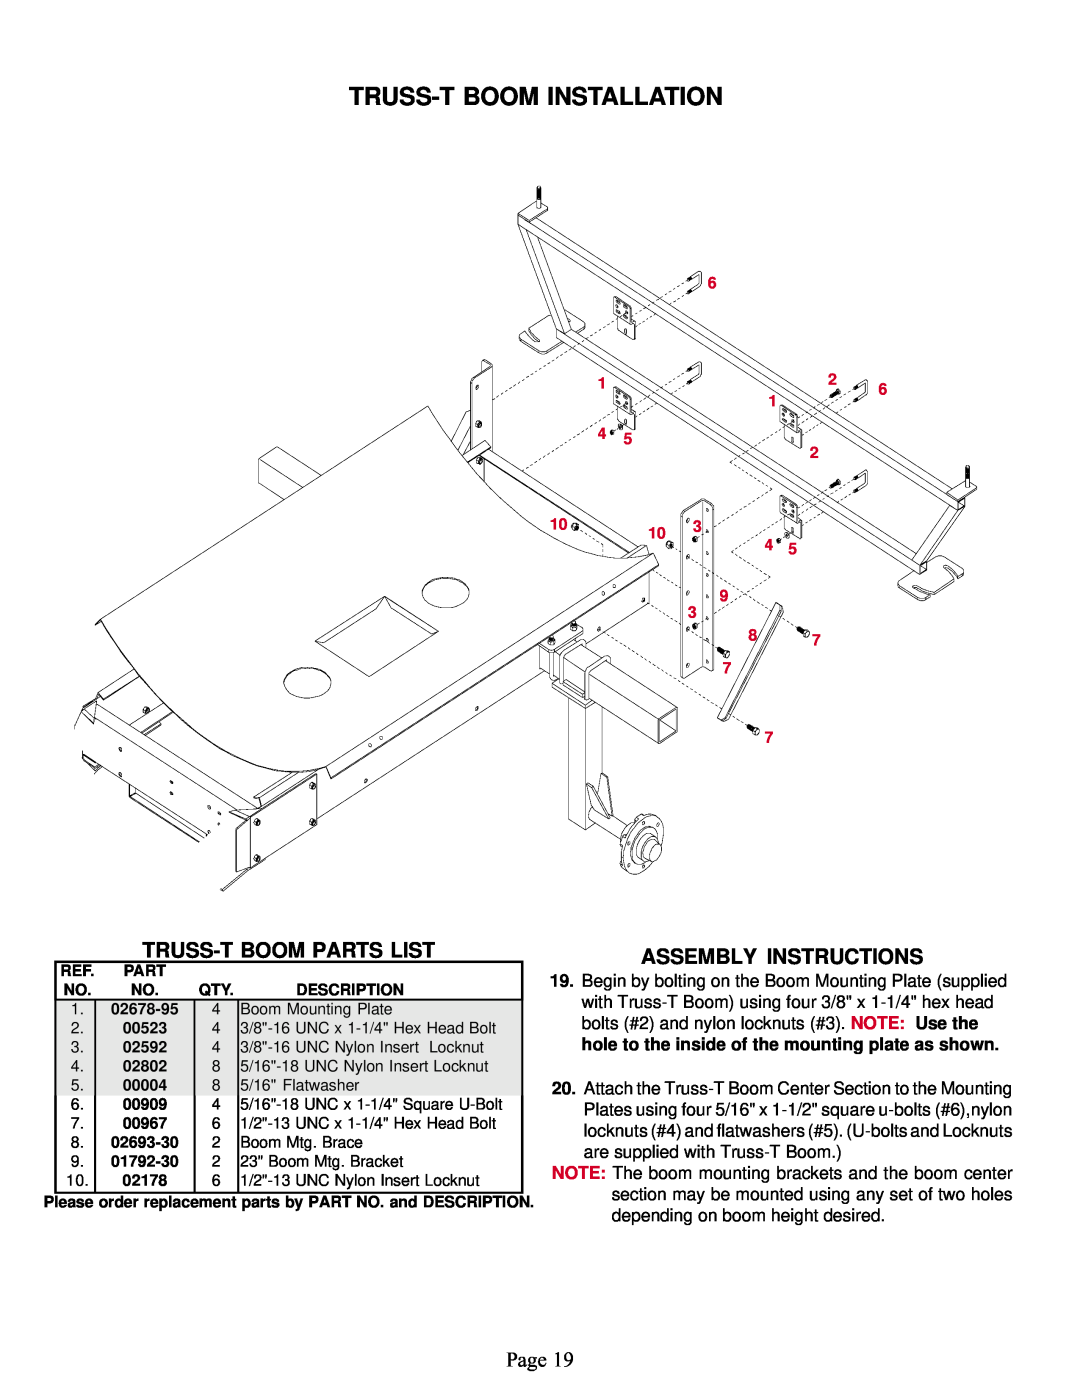 Demco Sprayer manual Truss-T Boom Installation, Page 